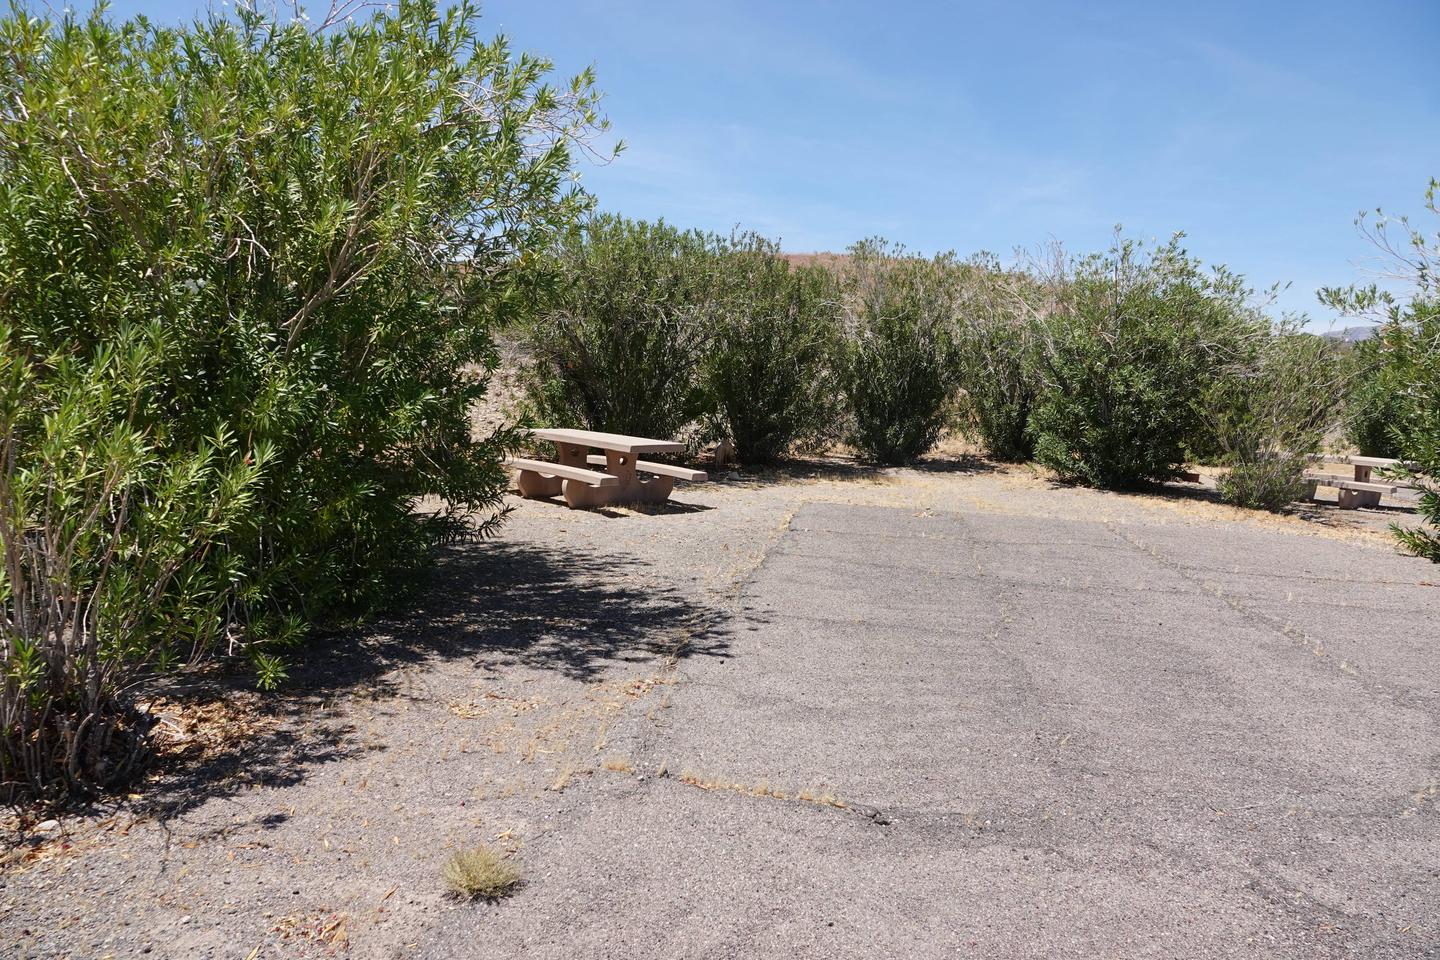 CB Campsite located in a desert setting 1502Callville Bay Campground Site 15